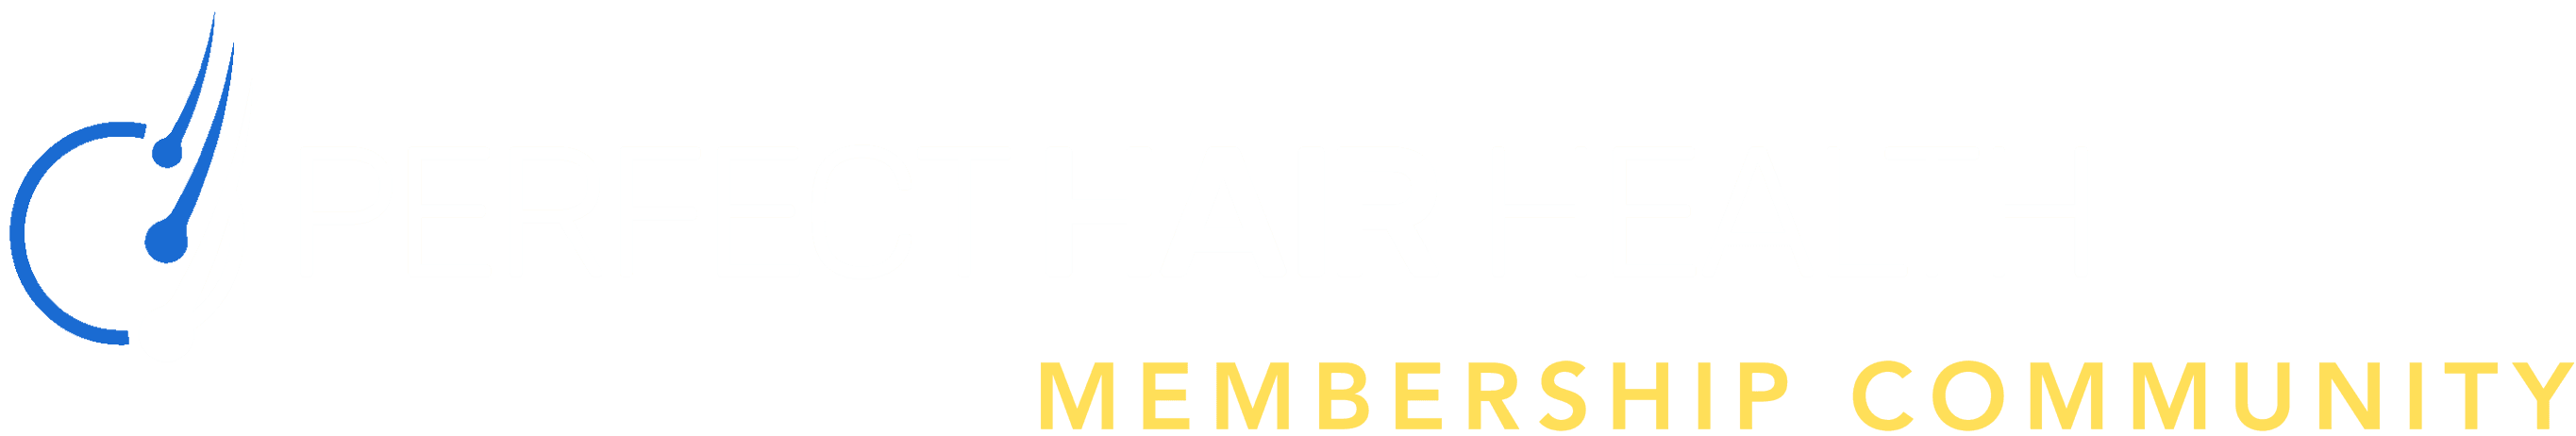 PHH-membership-logo3-compressor